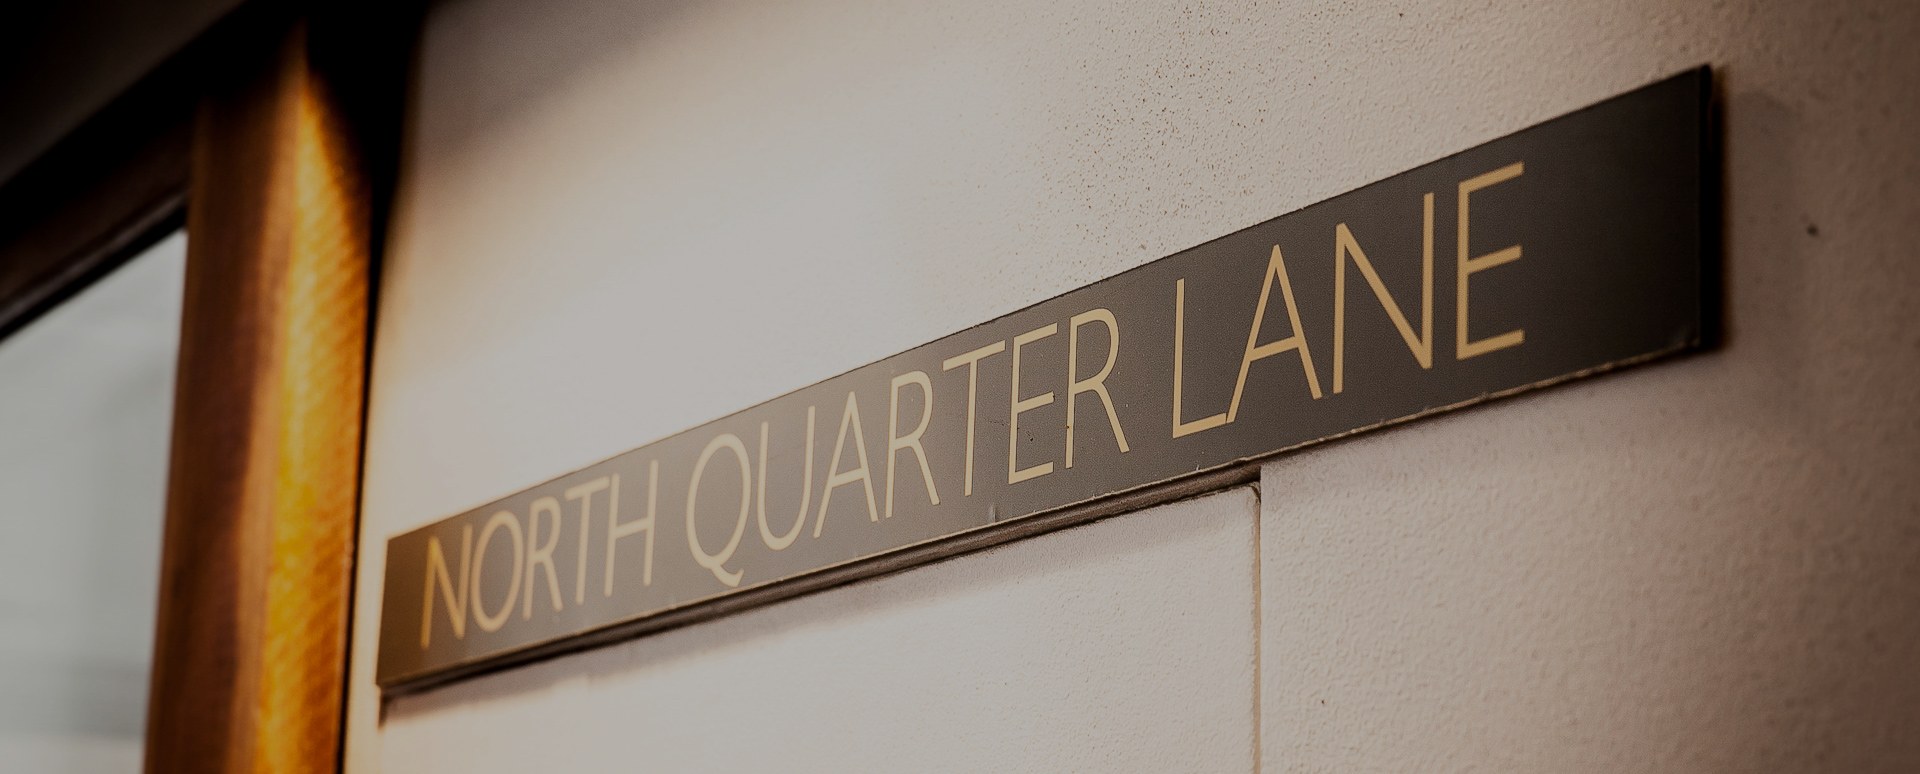 North Quarter Lane Chambers office